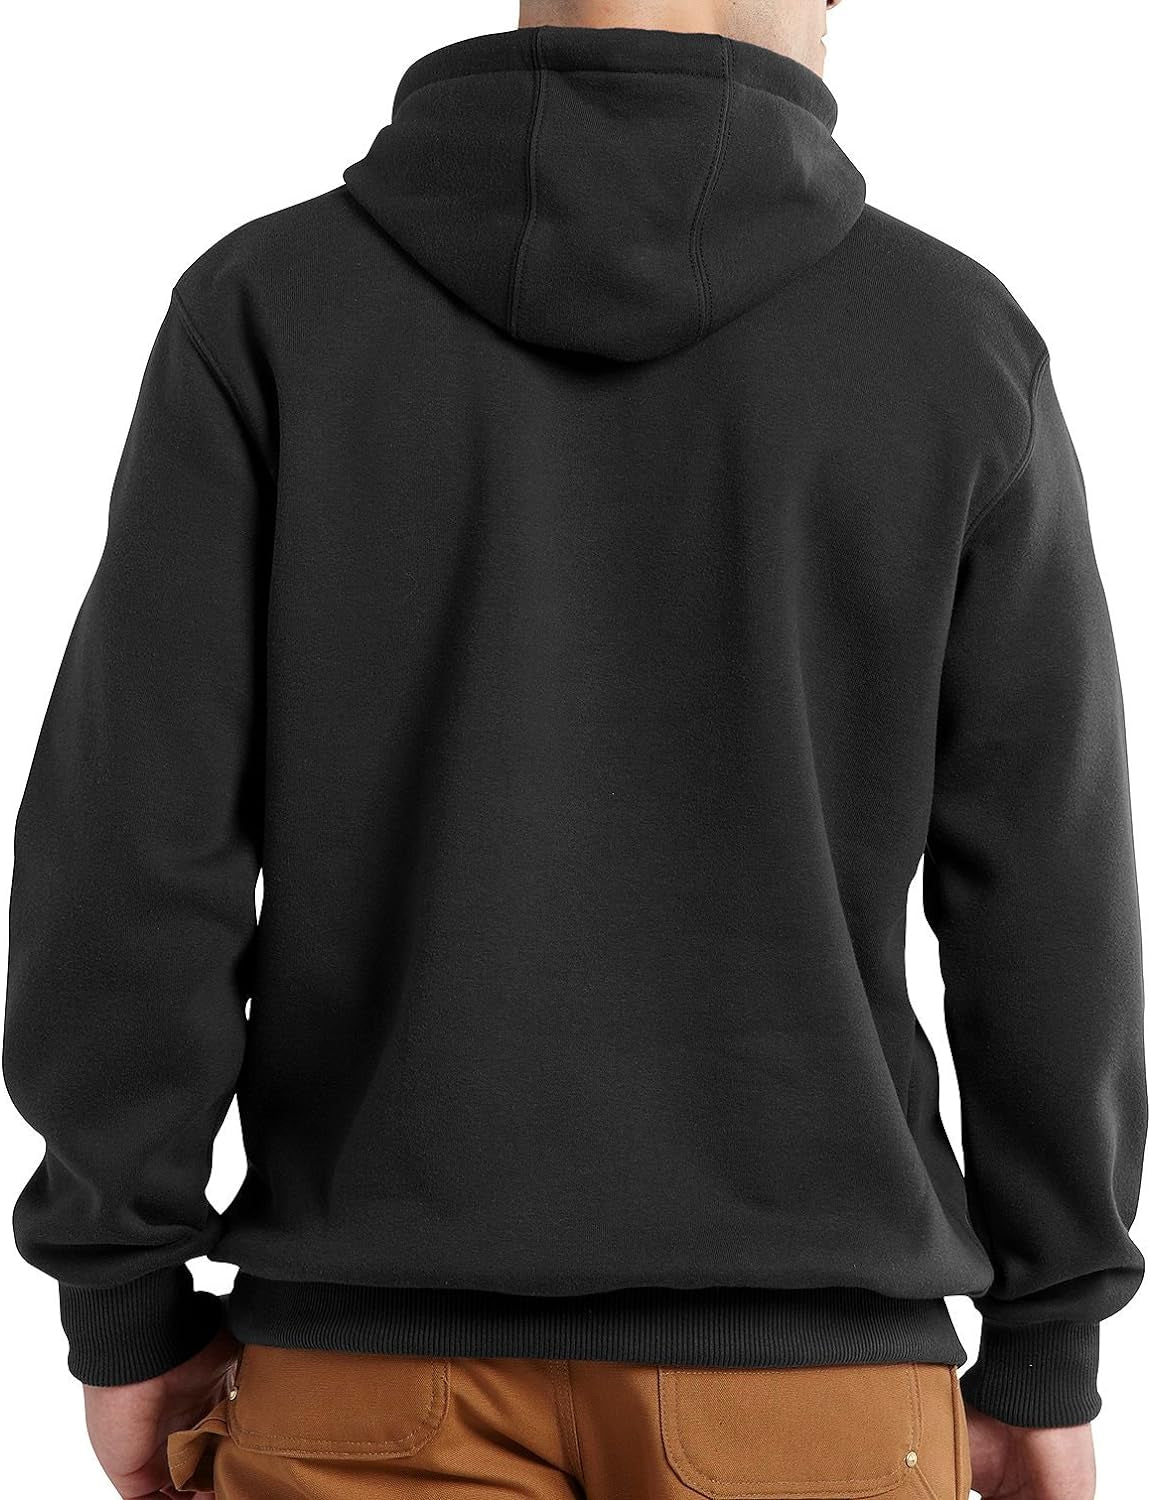 Men's Black Hooded Sweatshirt